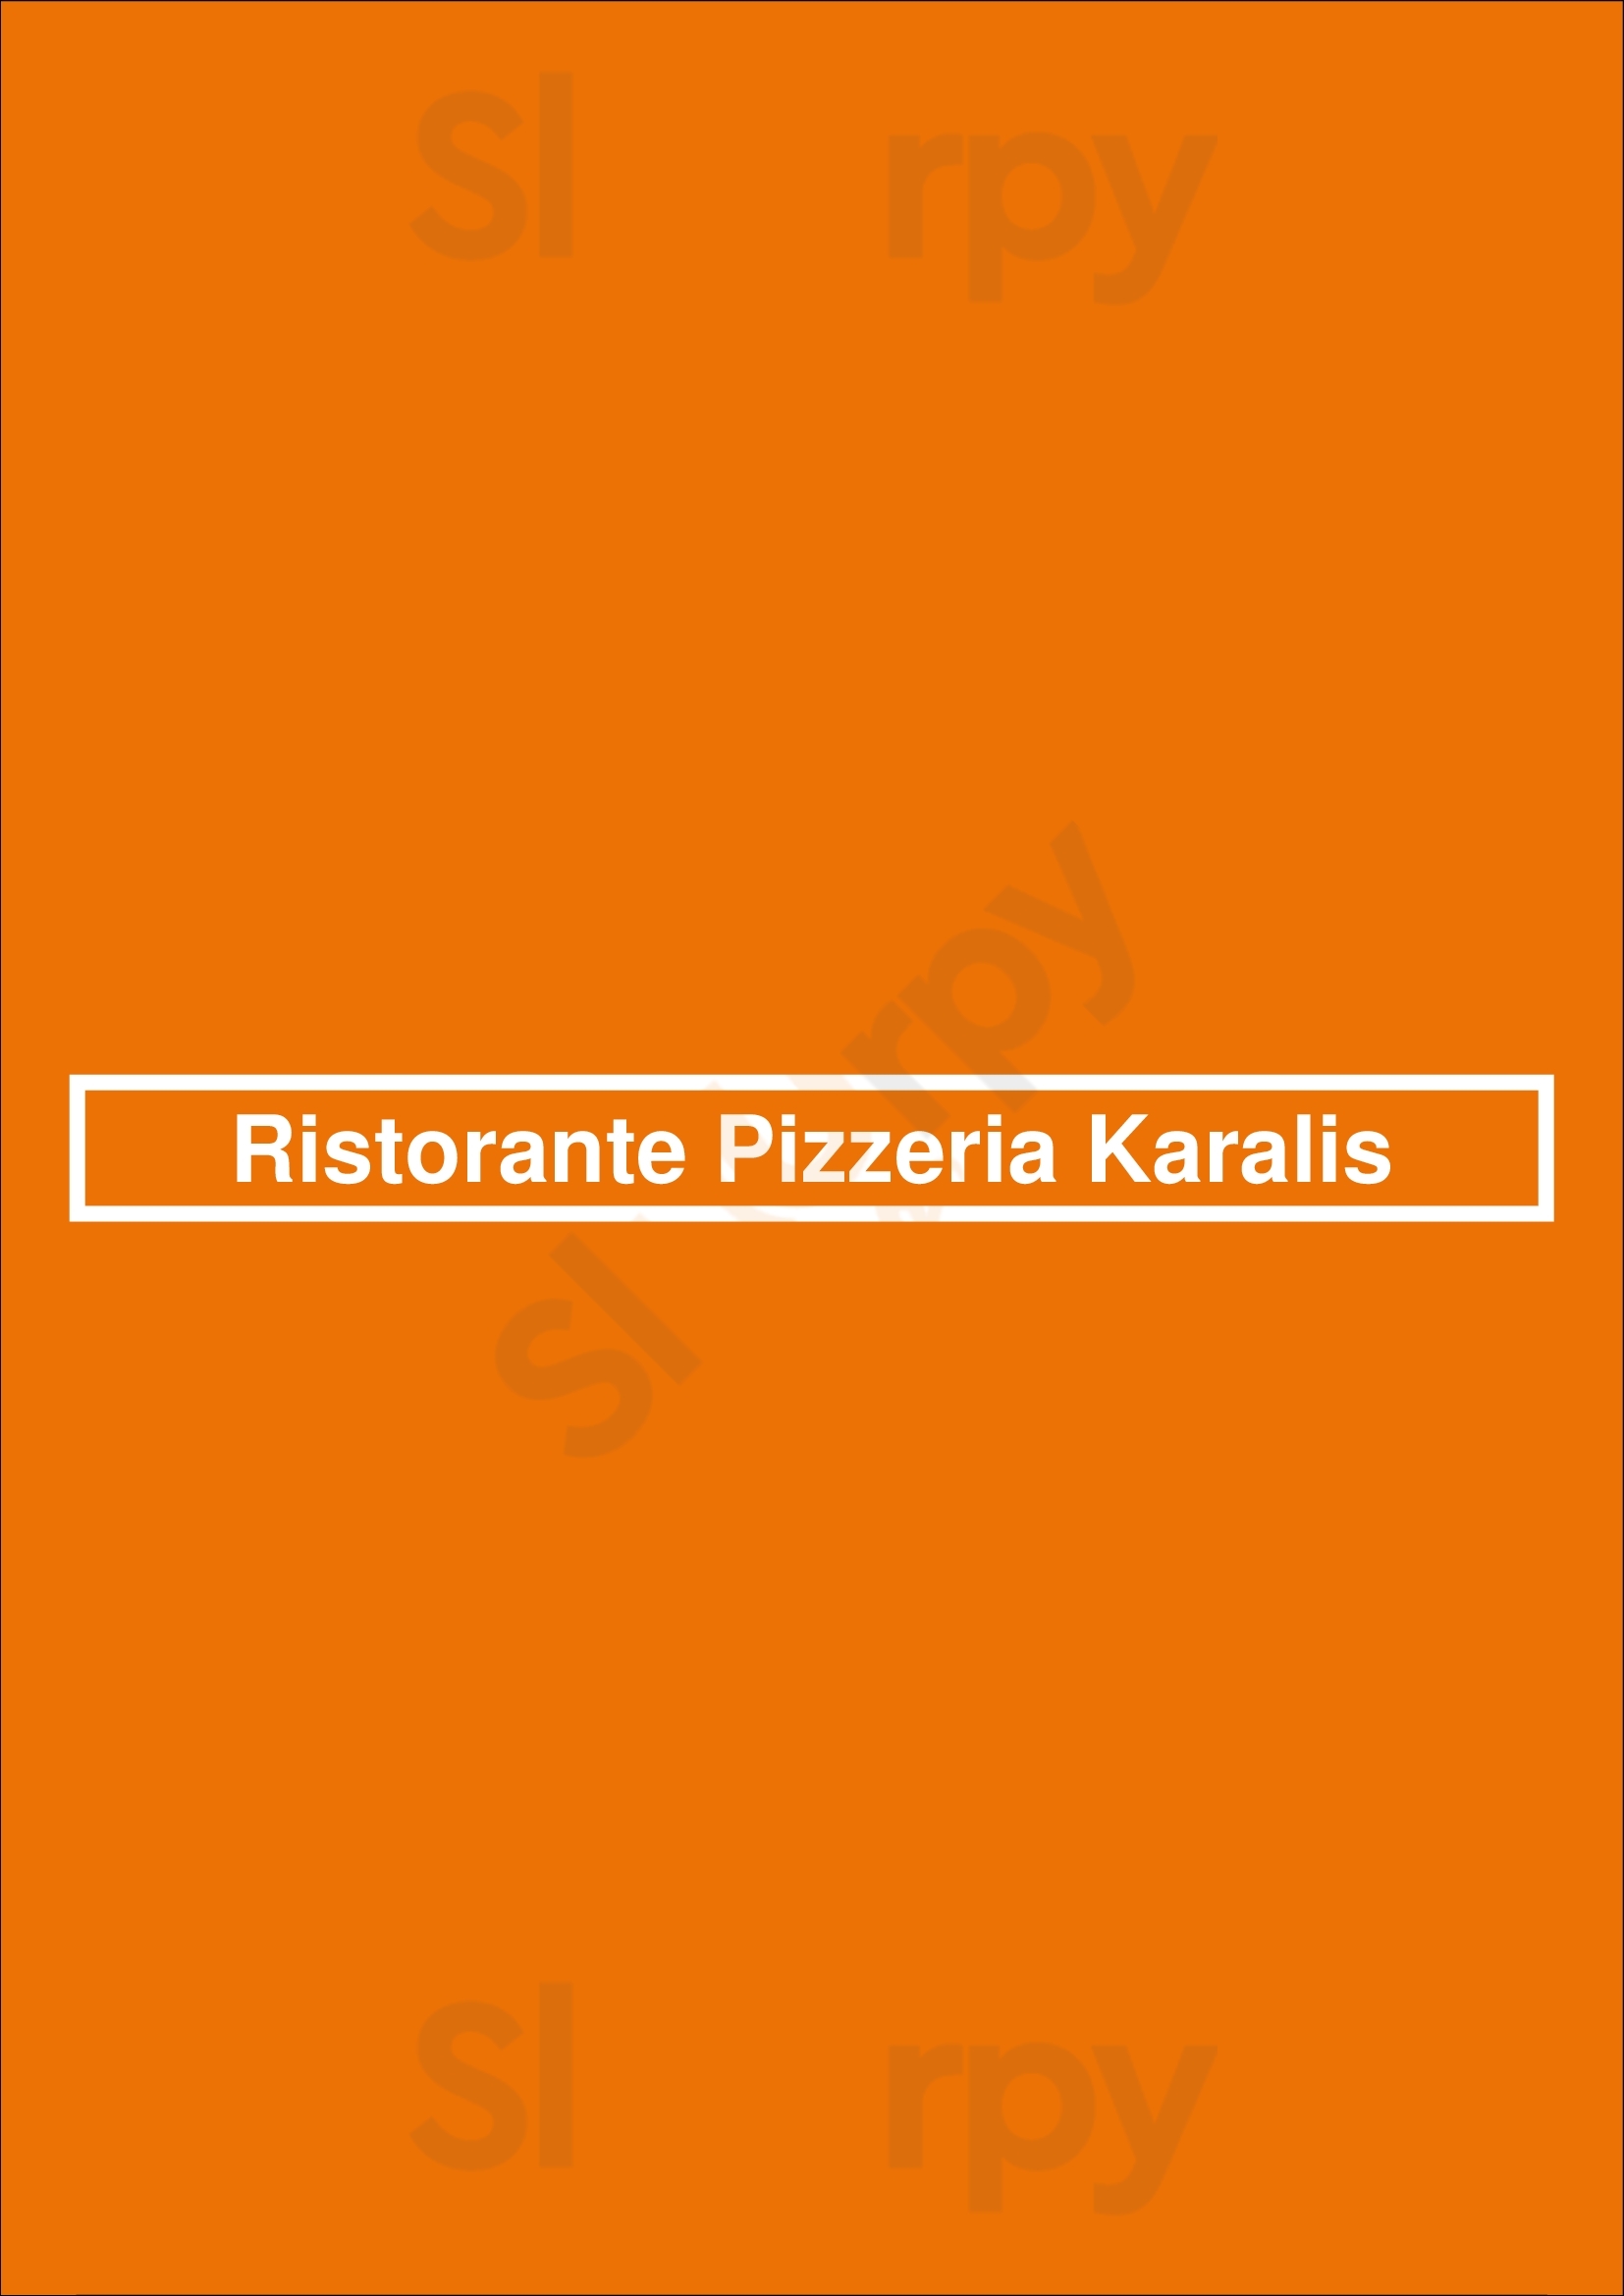 Ristorante Pizzeria Karalis Leiden Menu - 1